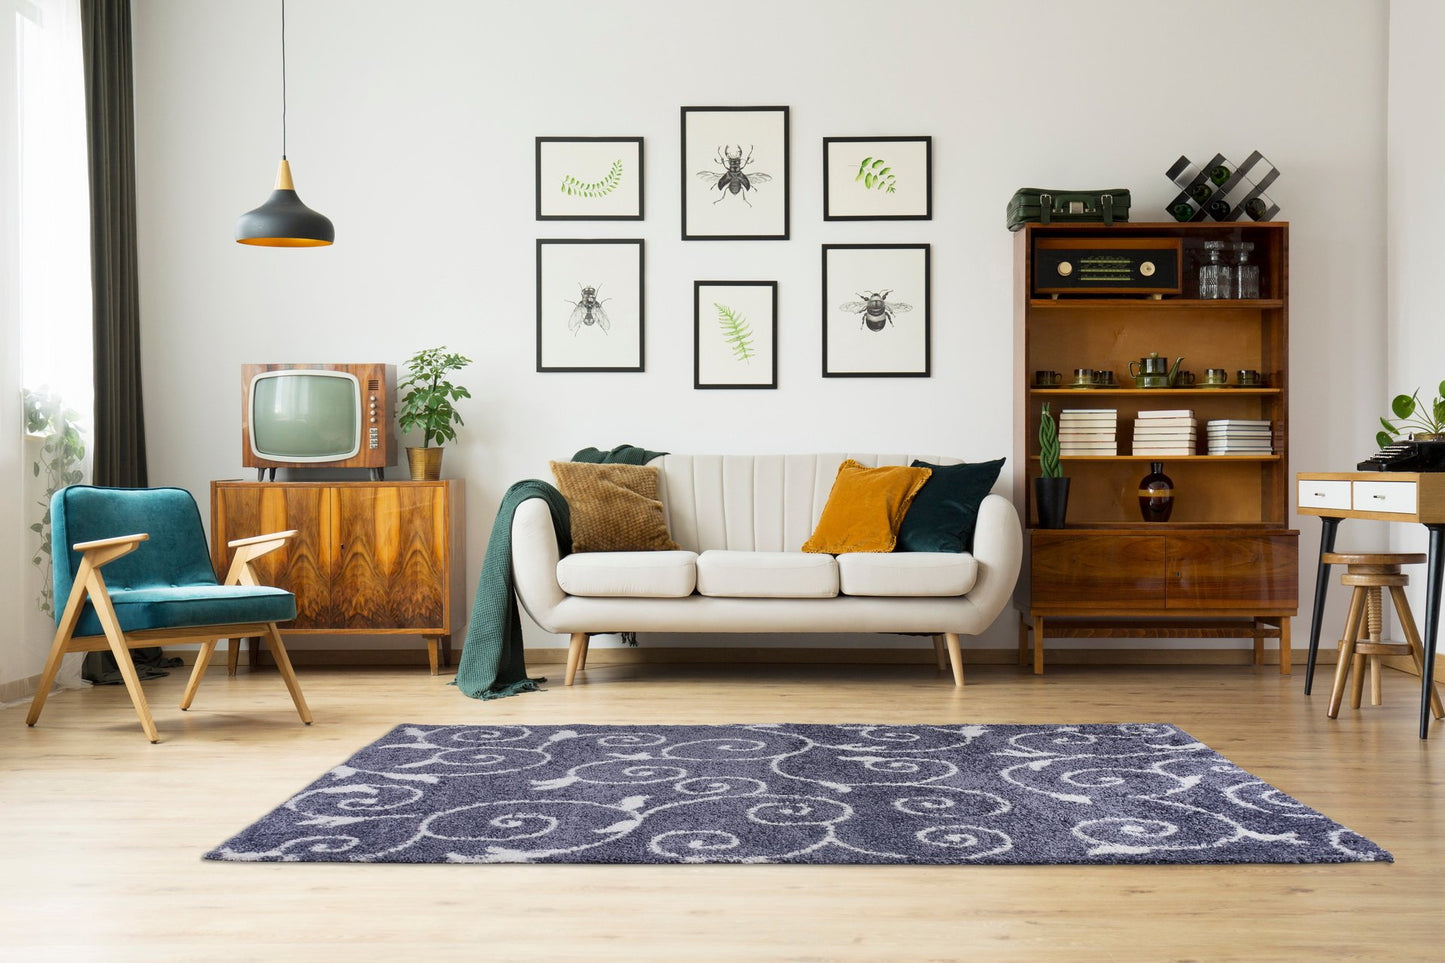 Shaggy Rabat Abstract Pattern Sustainable Spirals Style Indoor Area Rug Carpet, Dark Gray/White